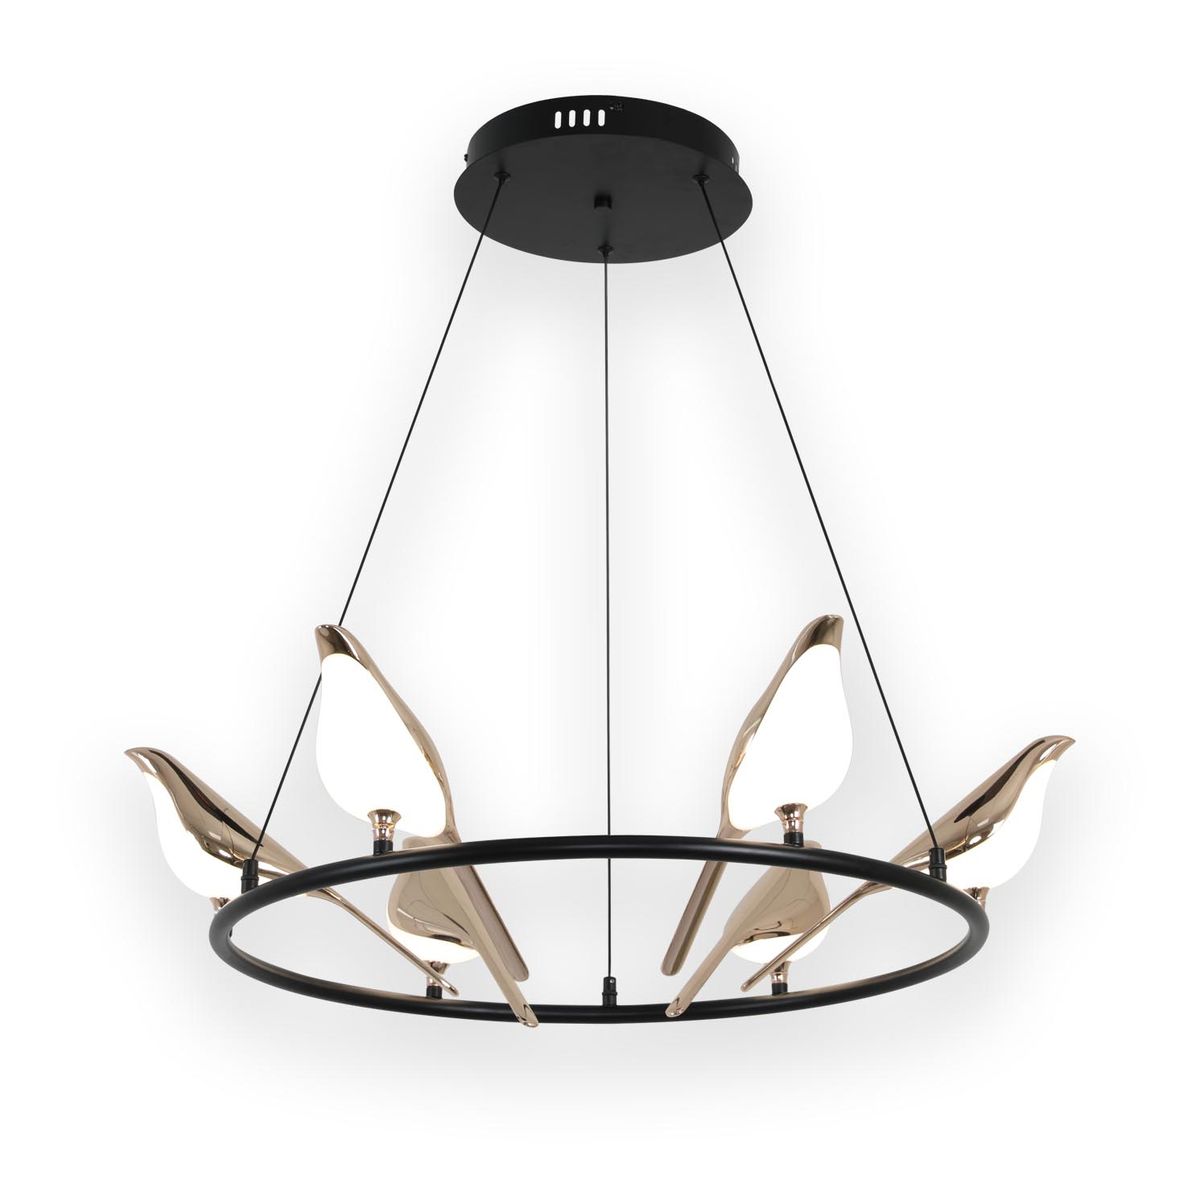 Подвесная светодиодная люстра с птичками Kink Light Арси 08446-6A,33, диаметр 65 см